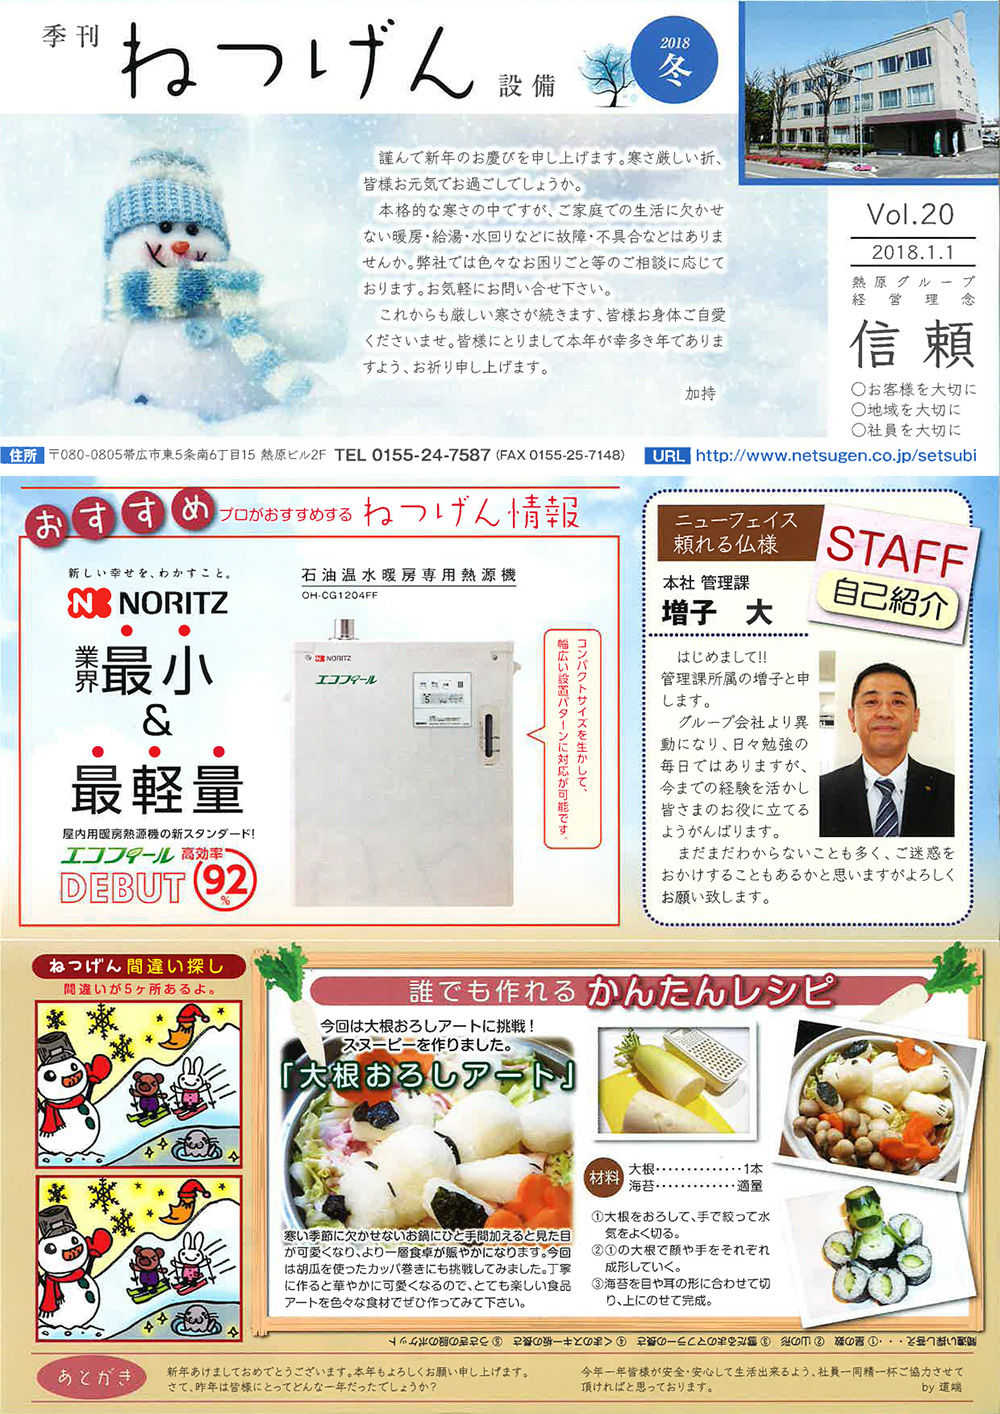 http://www.netsugen.co.jp/setsubi/information/images/180101kikan.jpg